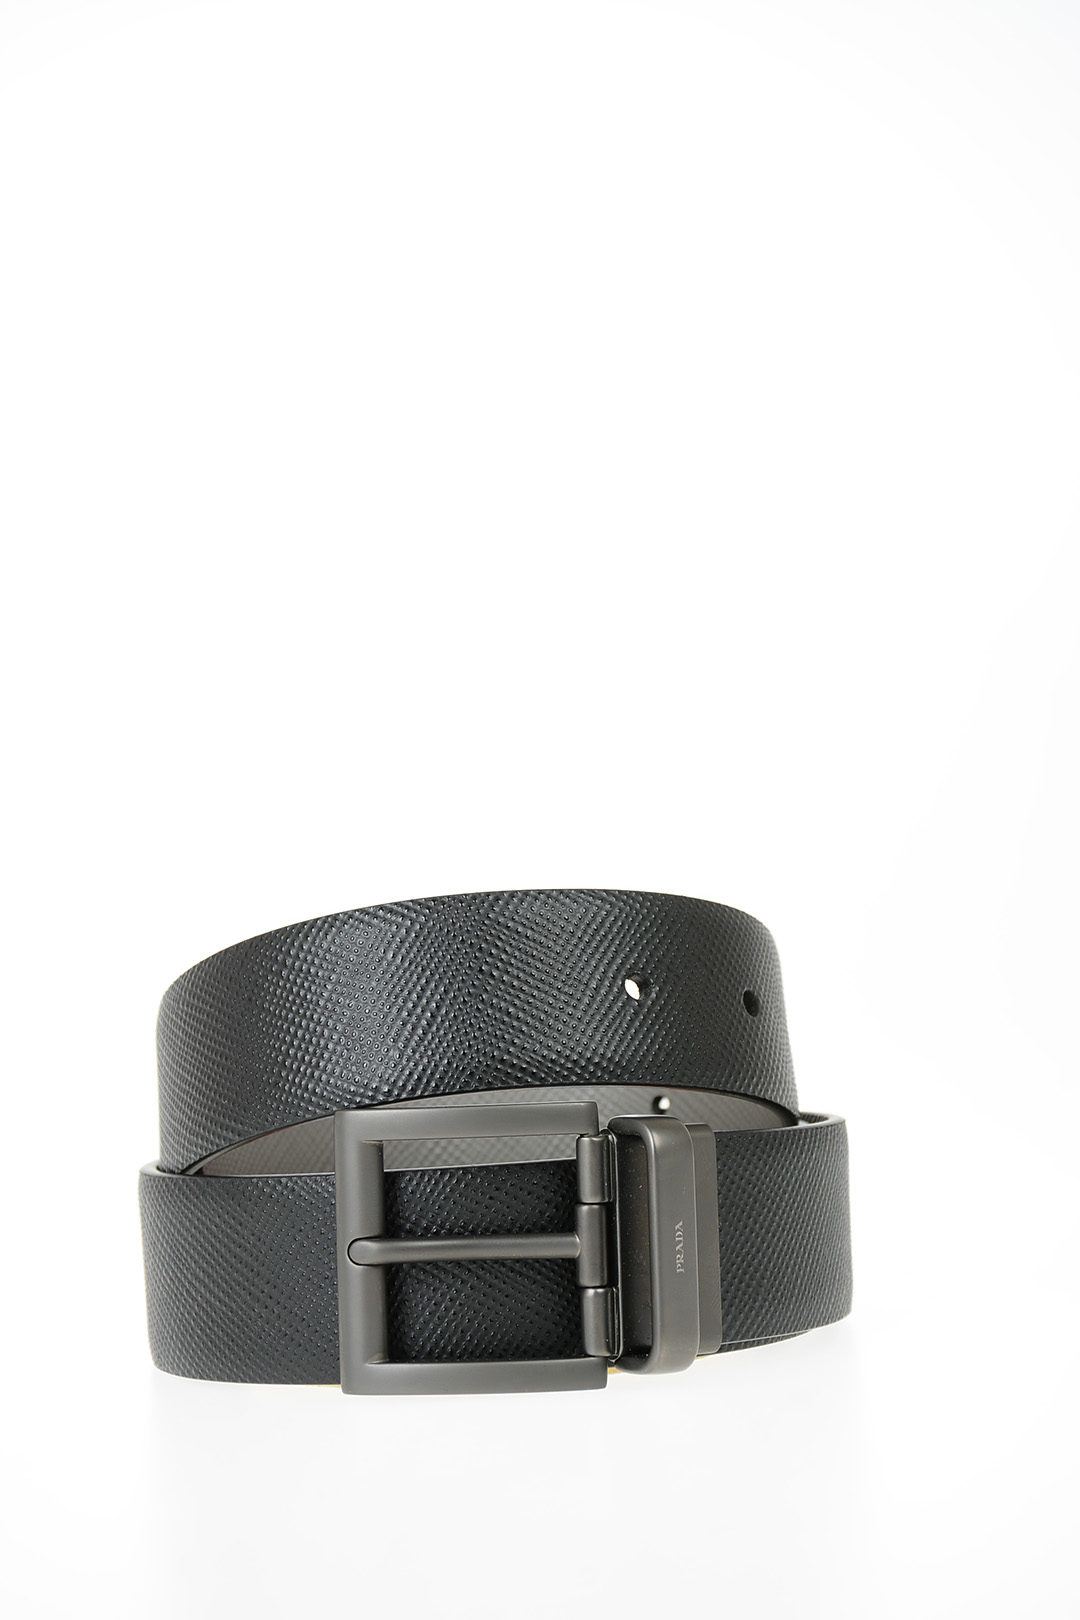 Prada 35mm Reversible Saffiano Leather Belt men - Glamood Outlet